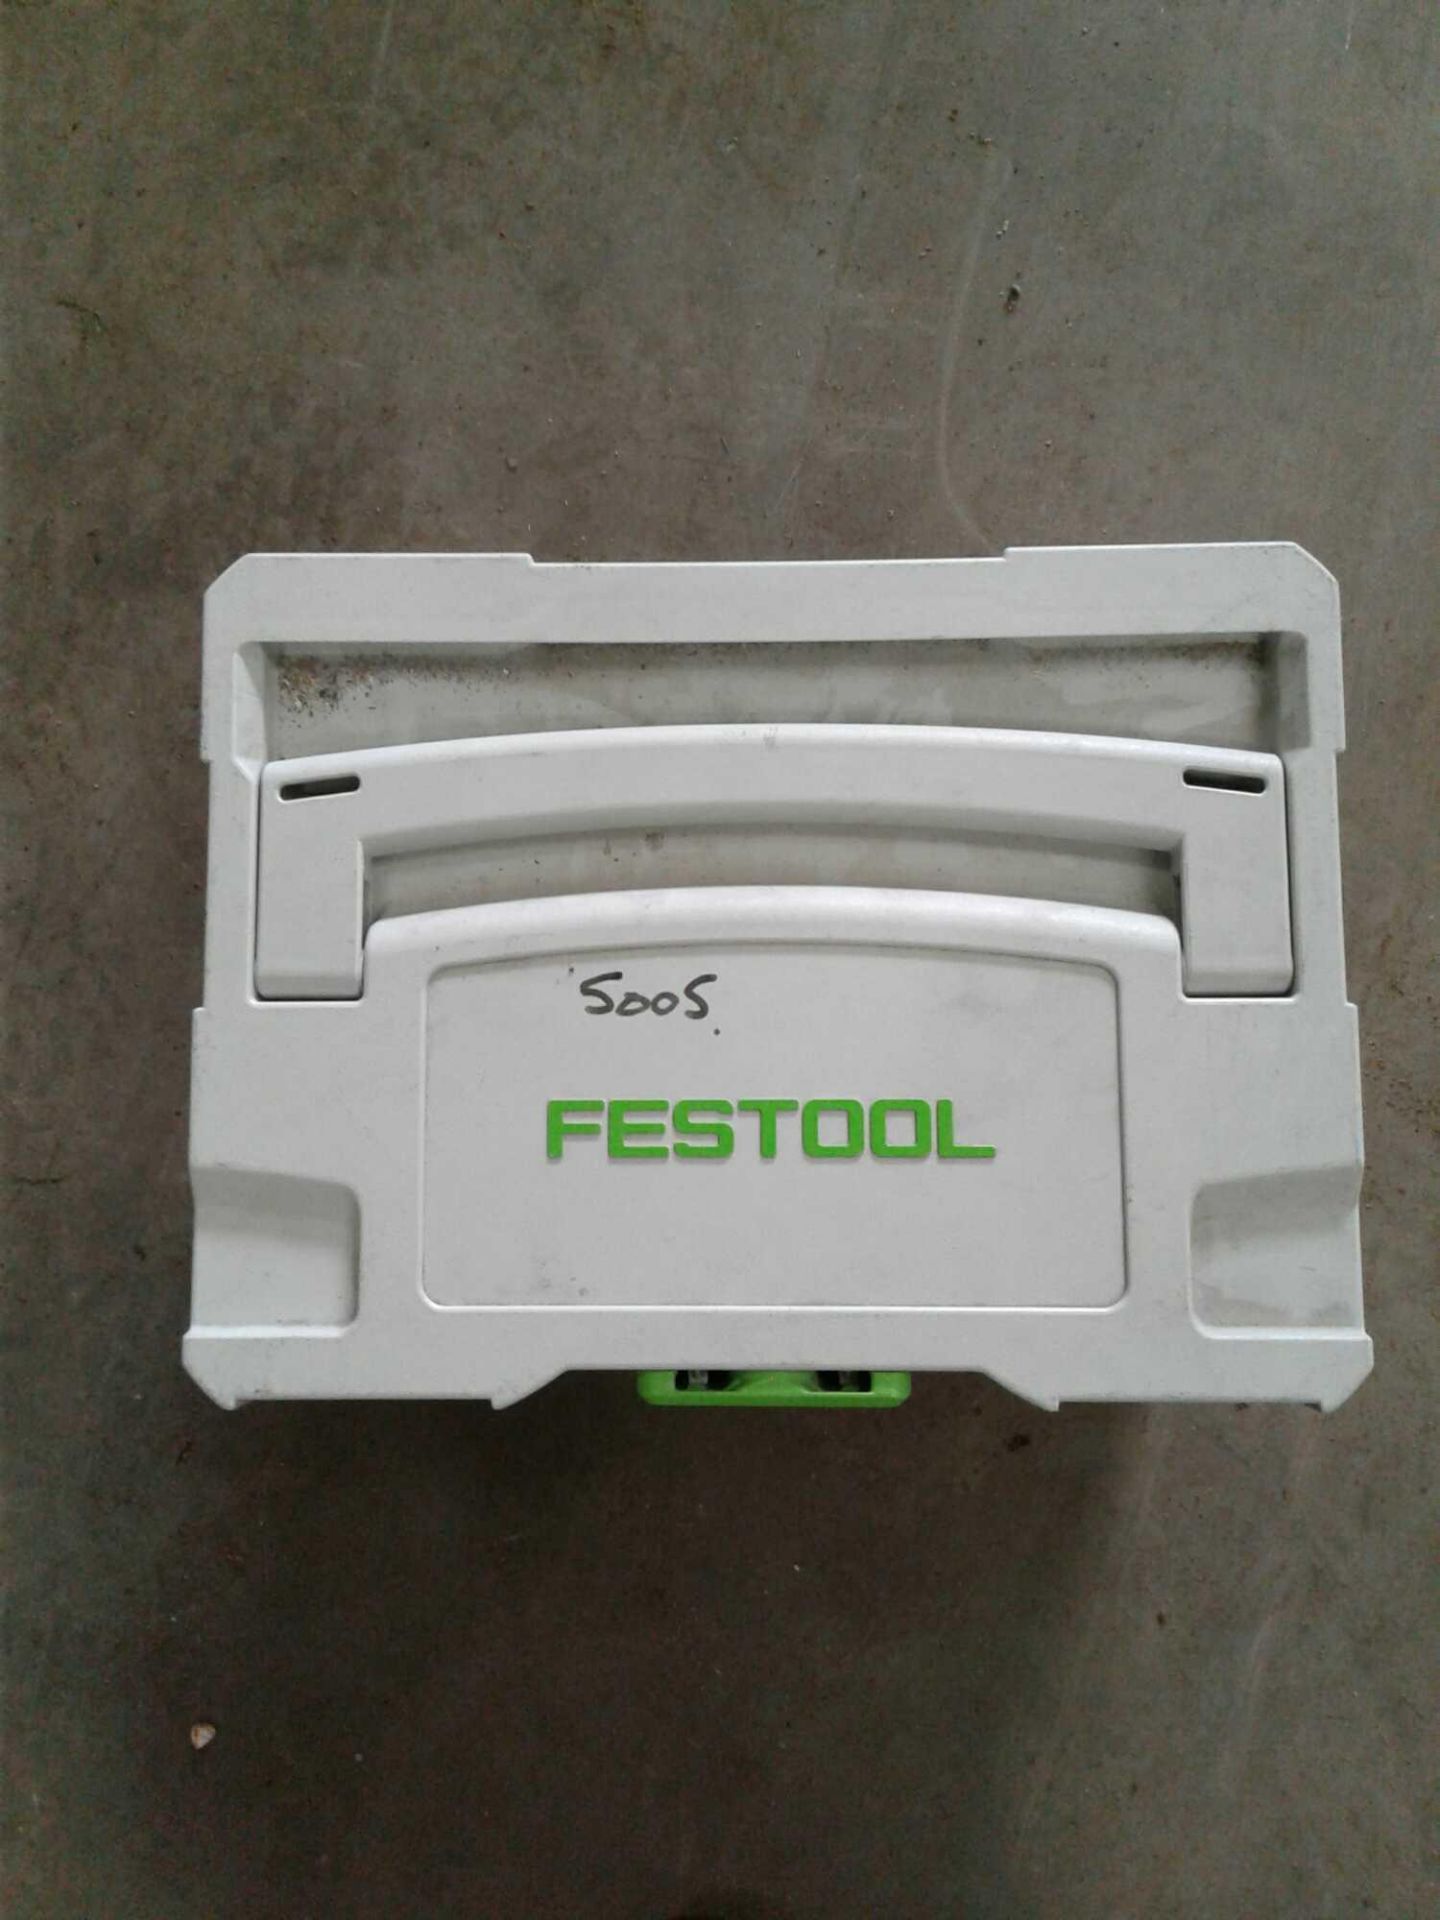 Festool OF1400 ebq router - Image 4 of 4